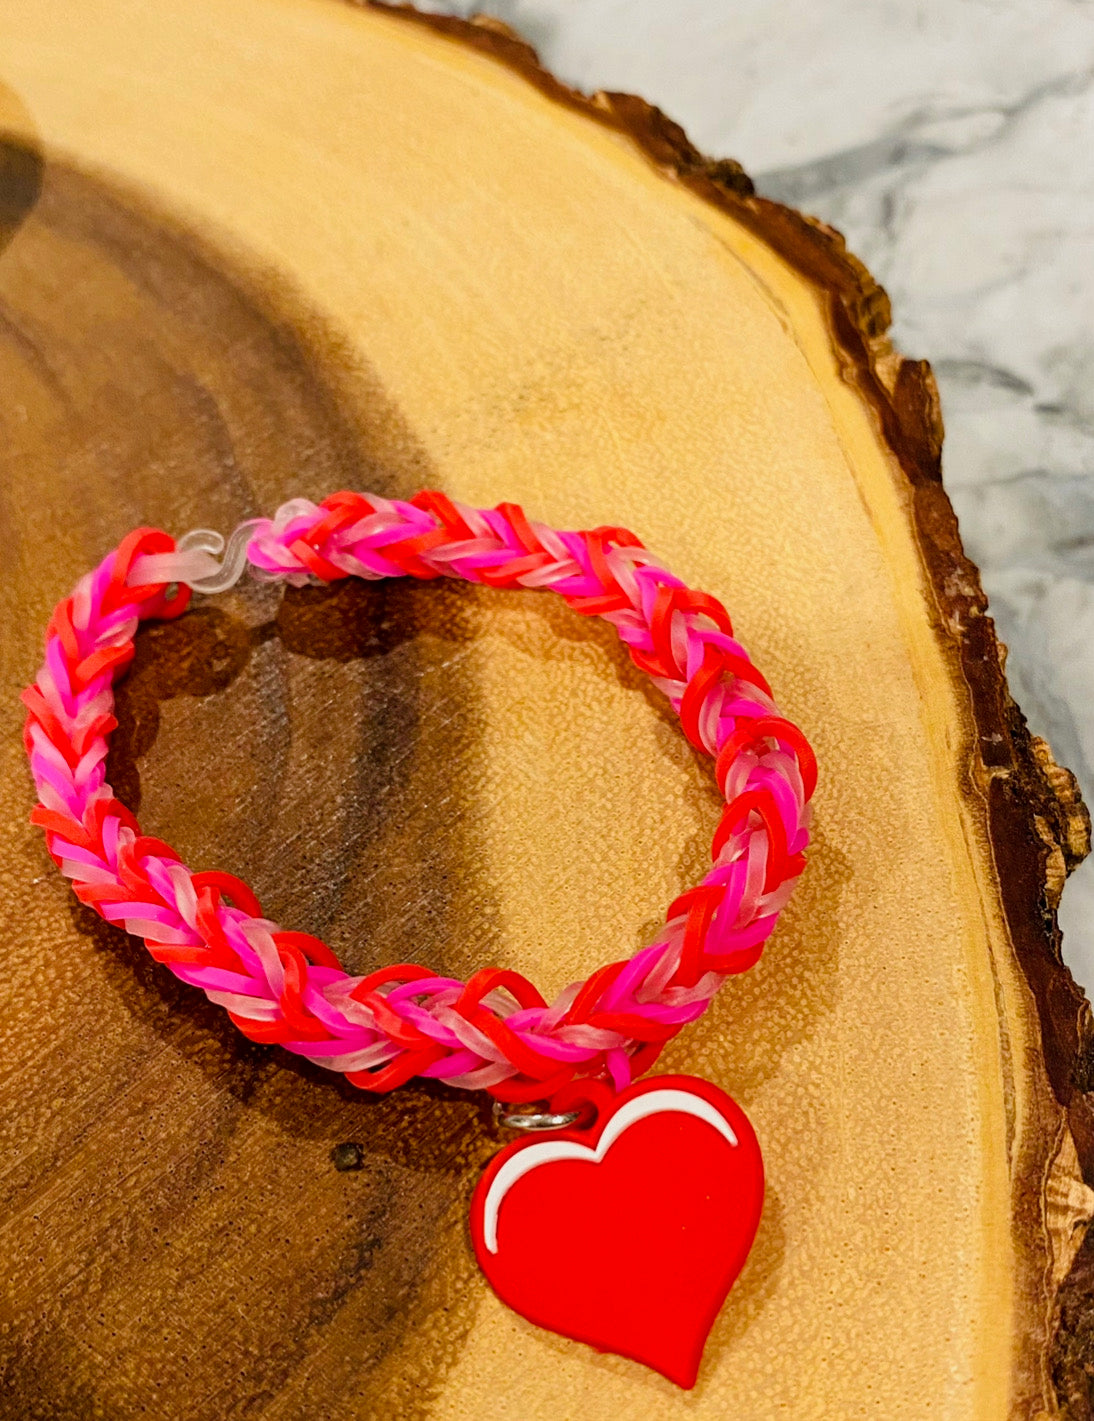 rubber band for rainbow loom bracelet